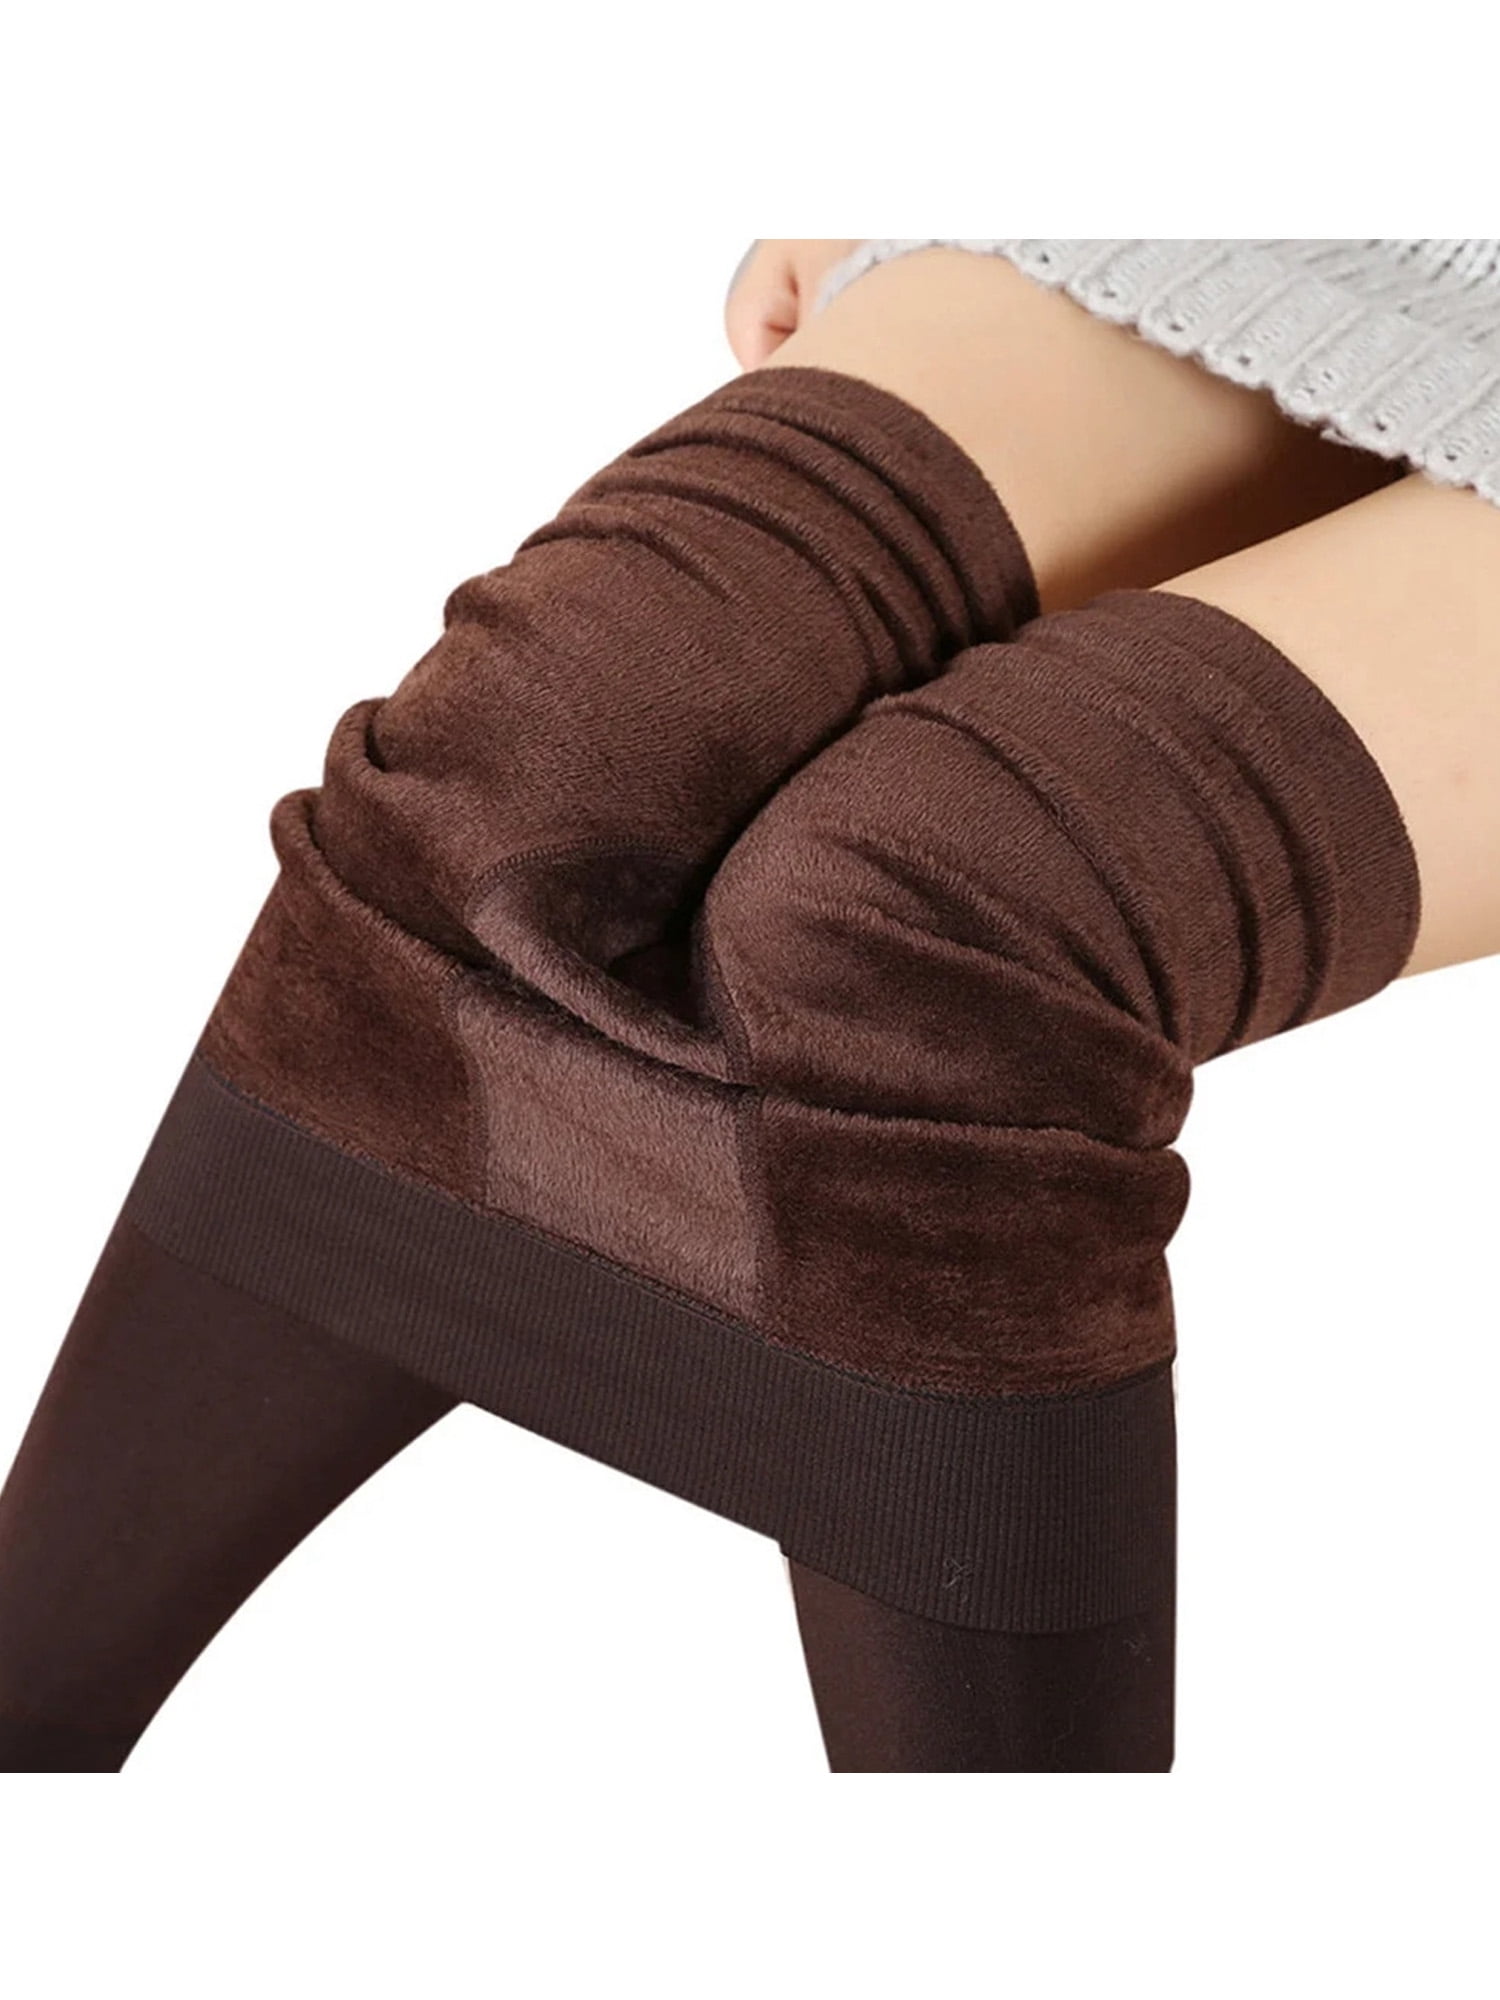 Pudcoco Women Winter Thermal Warm Thick Fleece Skinny Slim Leggings Stretch Pants